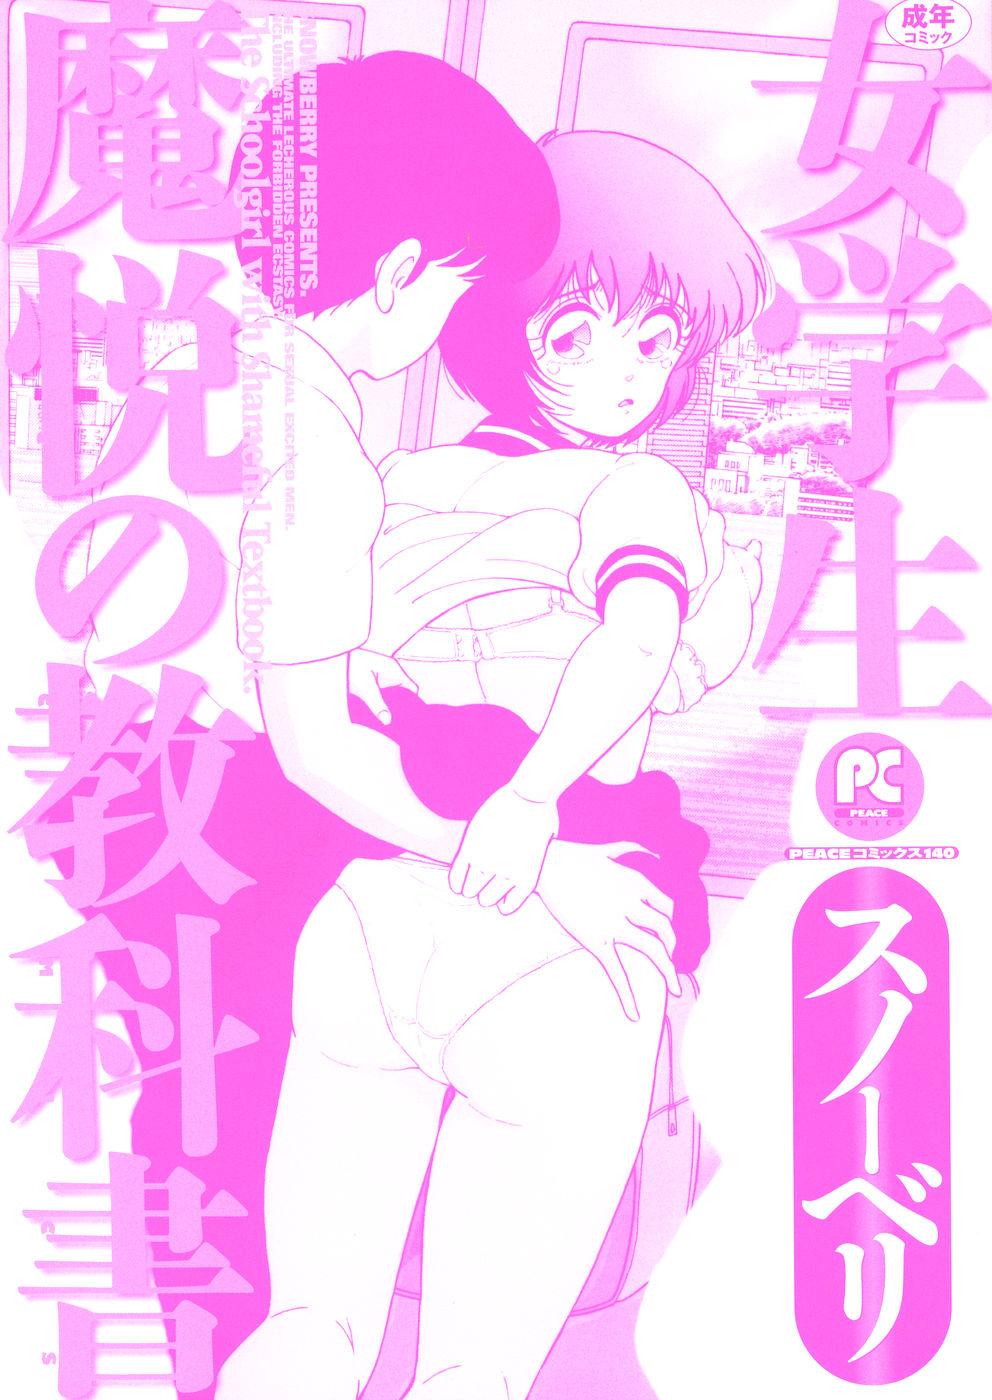 Jogakusei Maetsu no Kyoukasho - The Schoolgirl With Shameful Textbook. 4